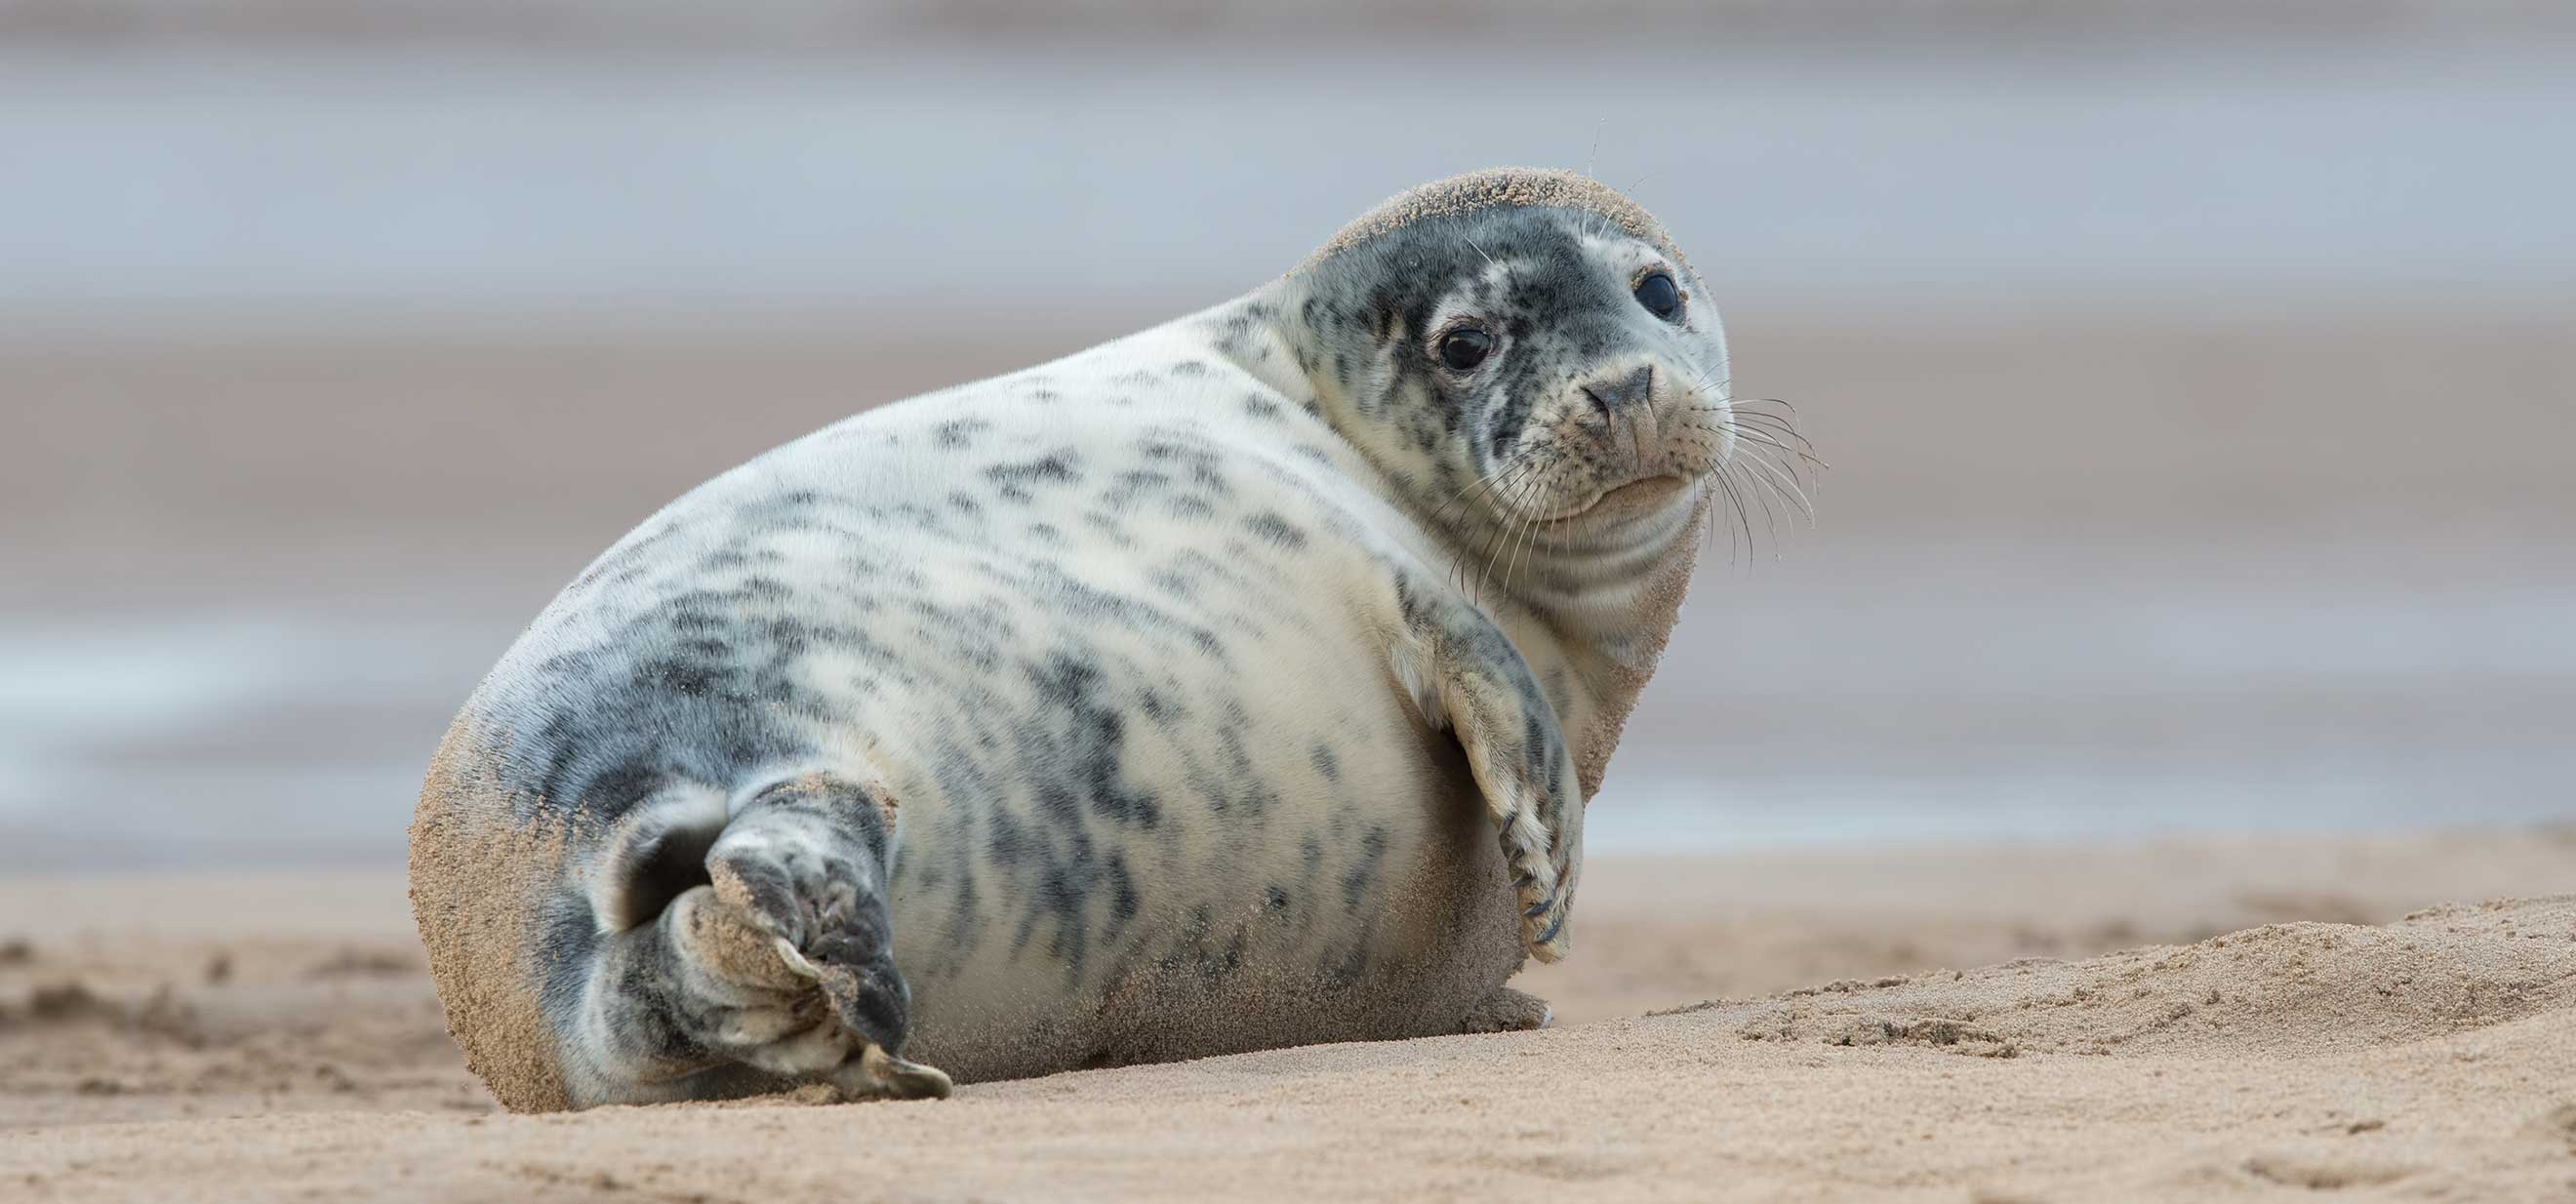 Atlantic seal on the beach